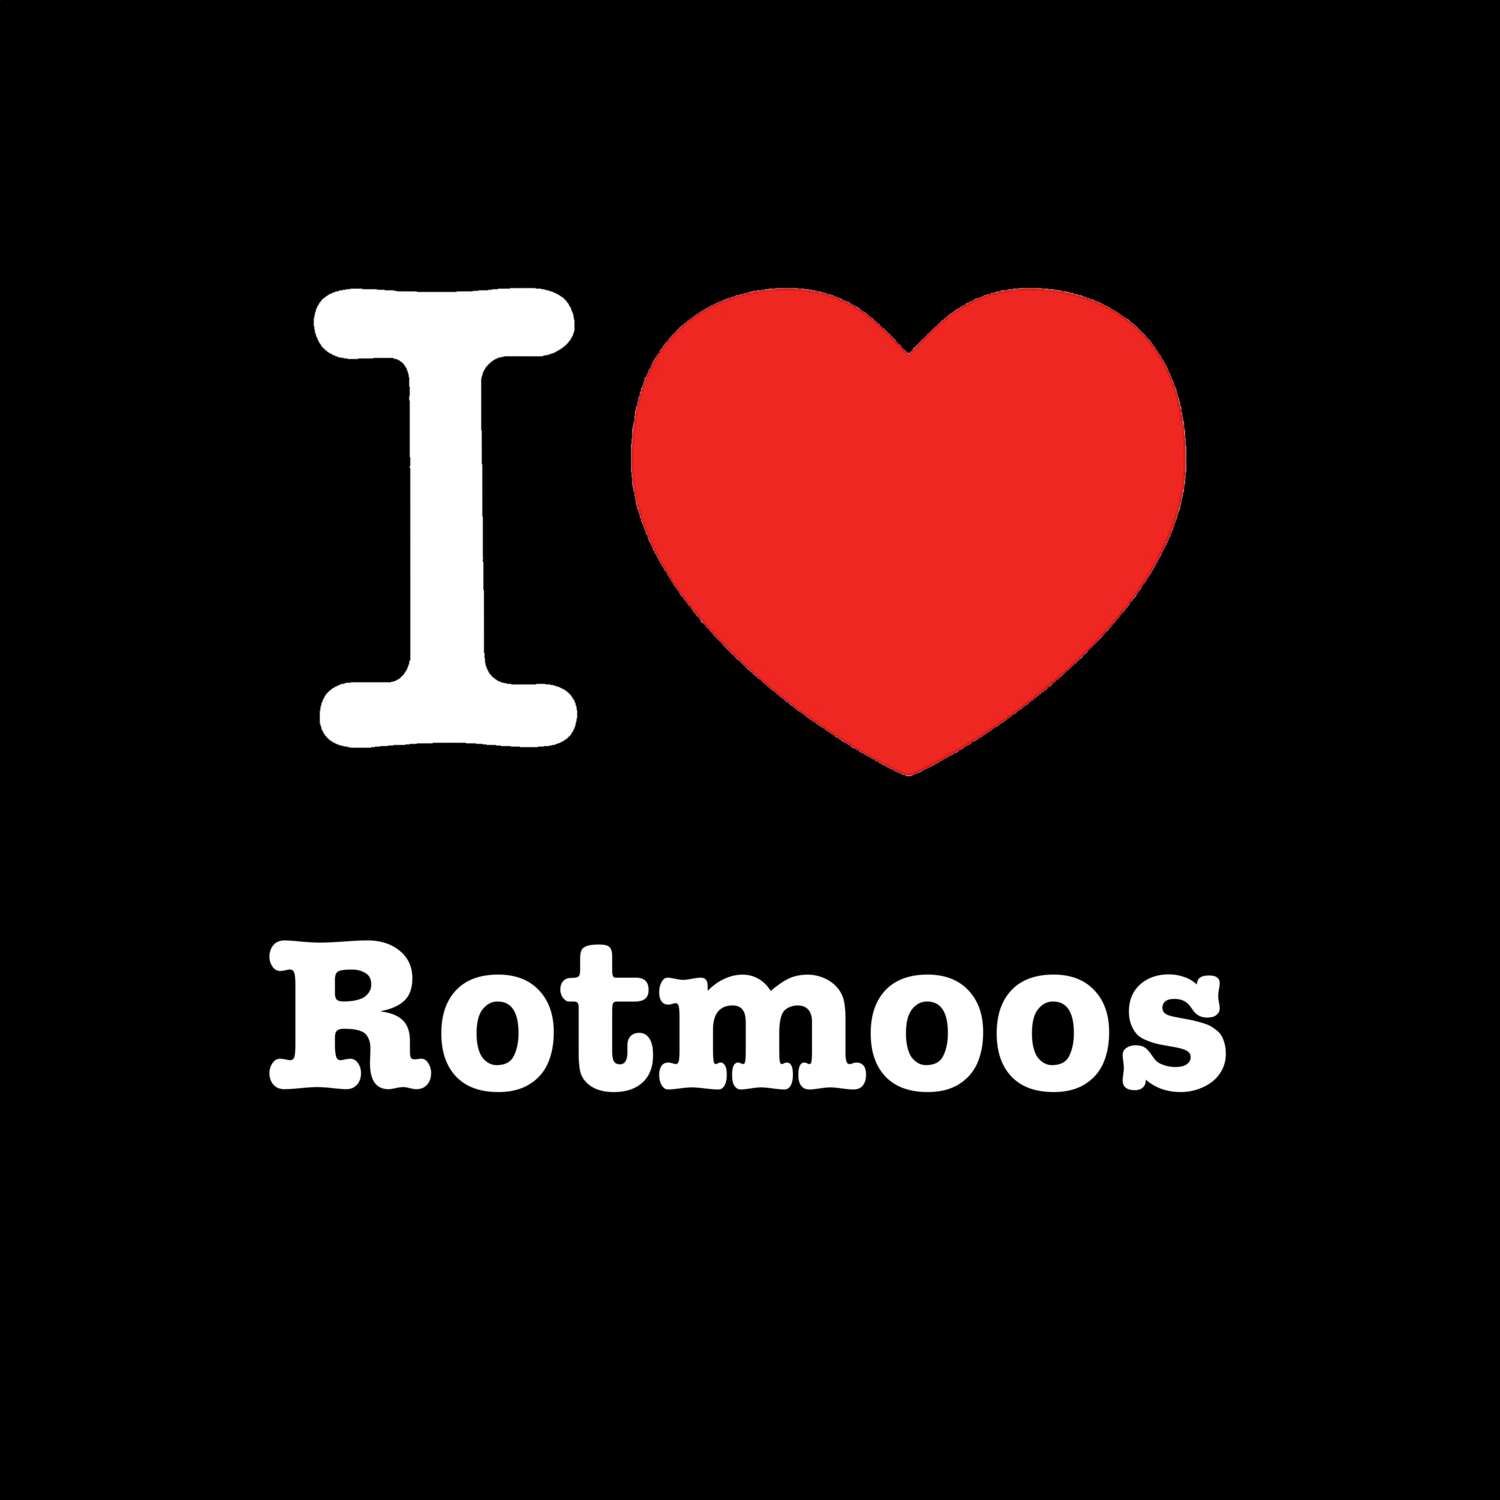 Rotmoos T-Shirt »I love«